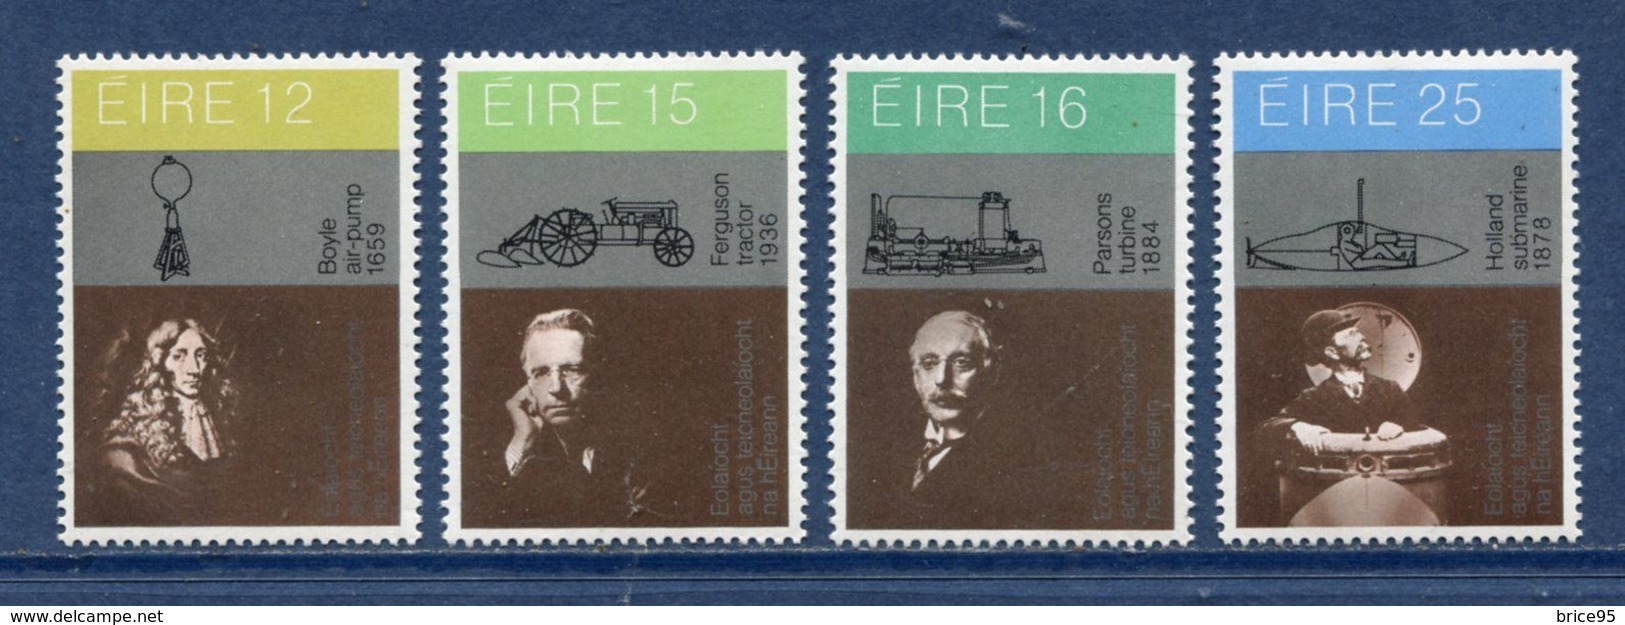 Irlande - YT N° 436 à 439 - Neuf Sans Charnière - 1981 - Ongebruikt